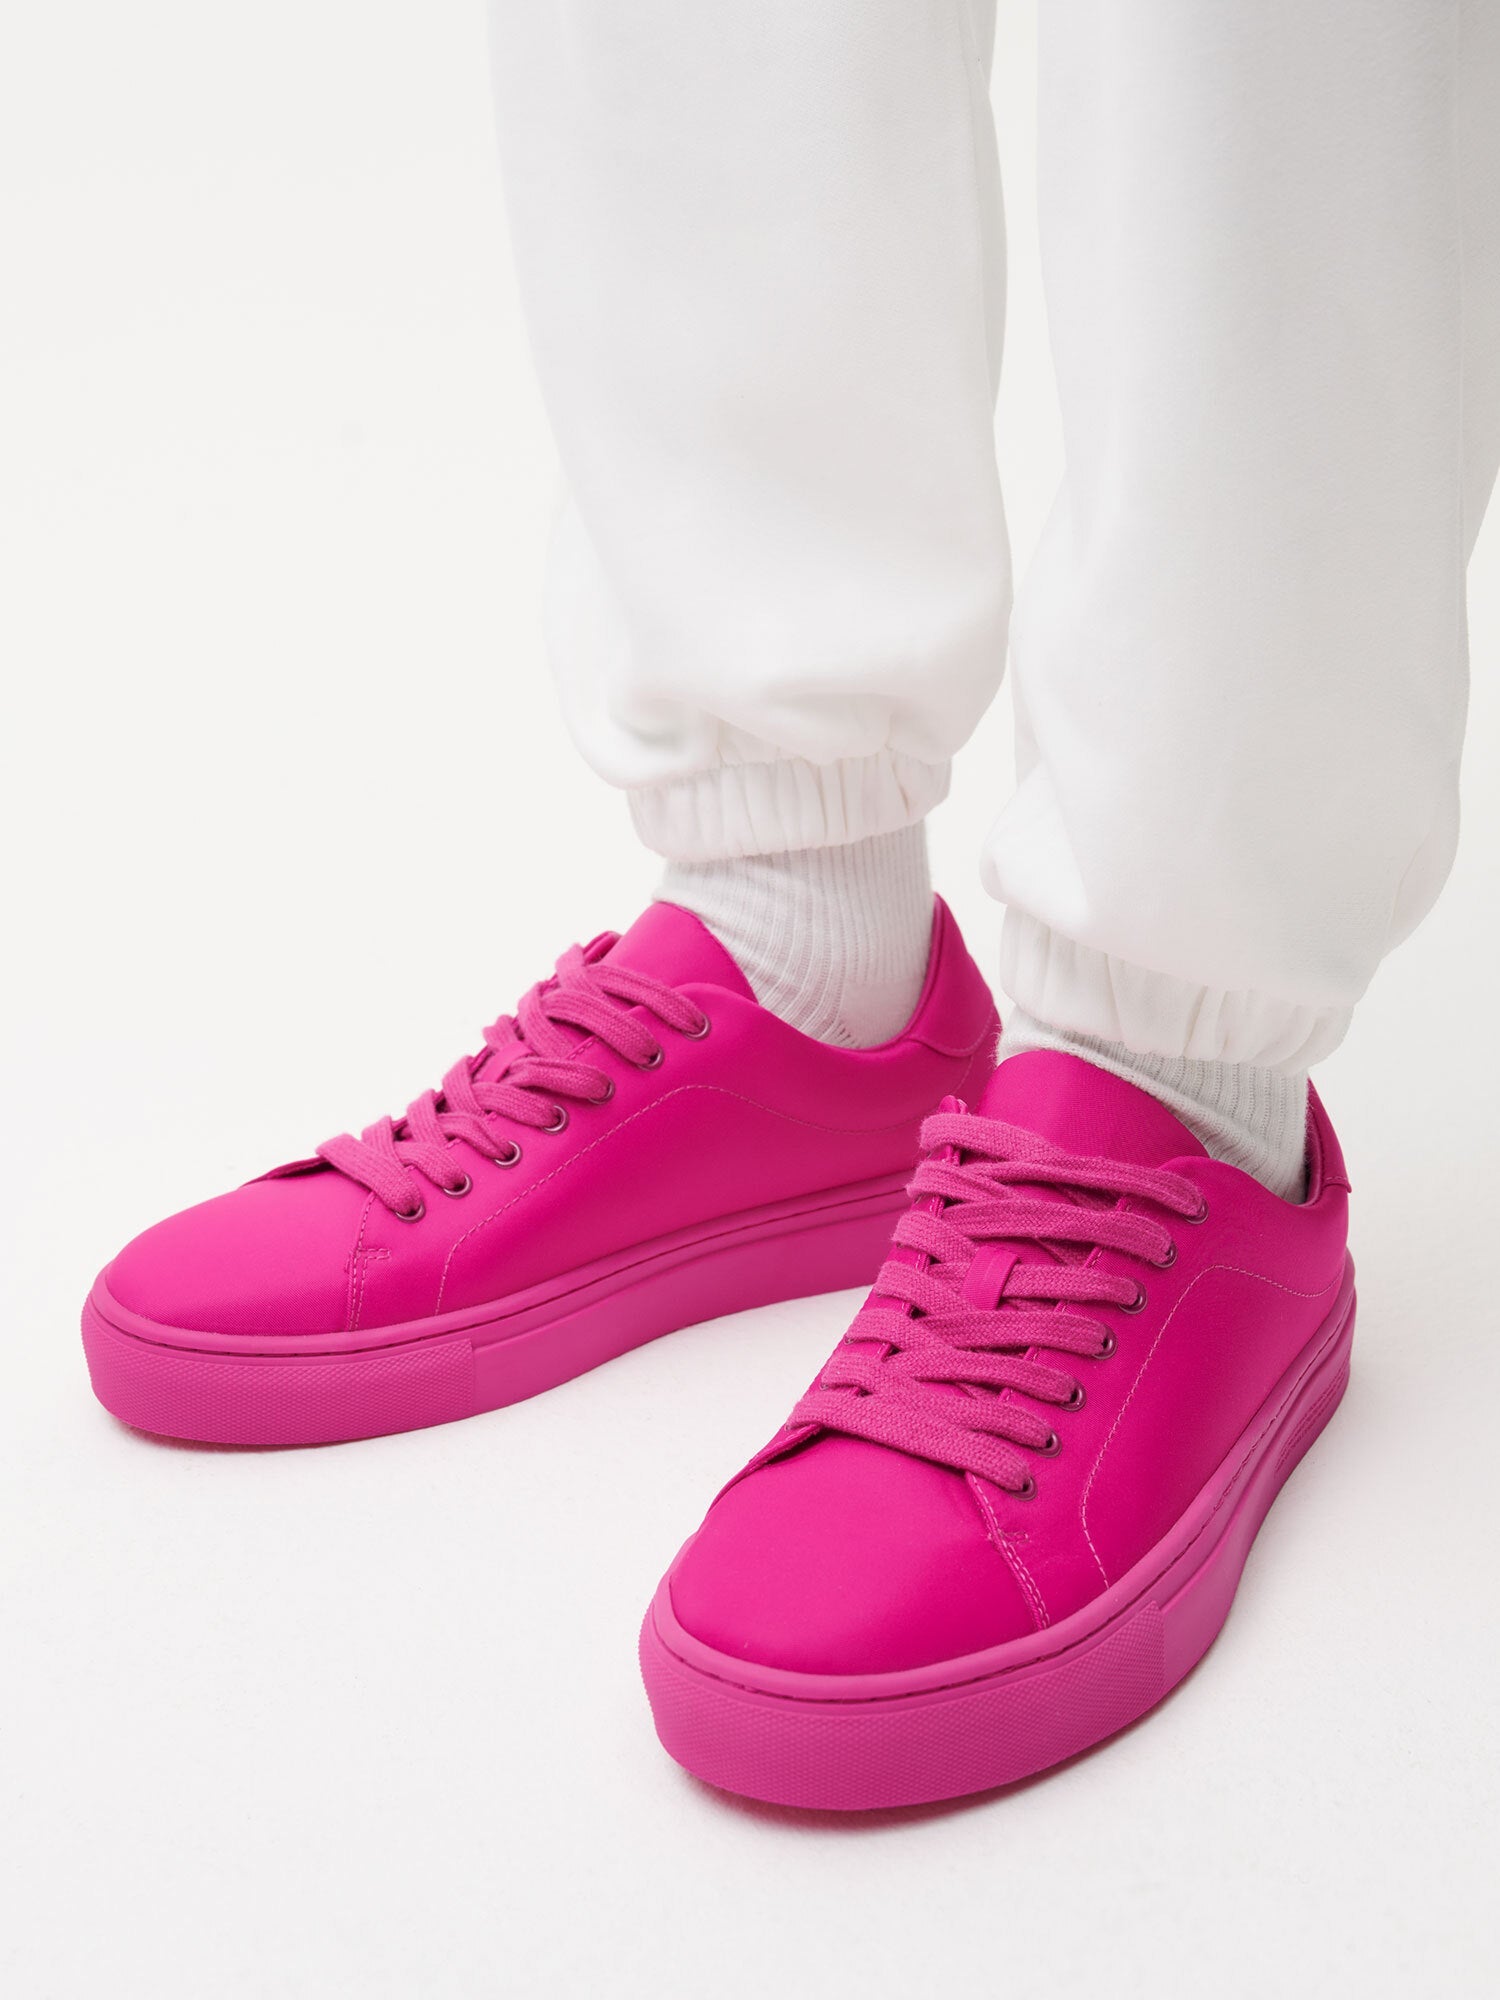 Nylon Sneakers Female